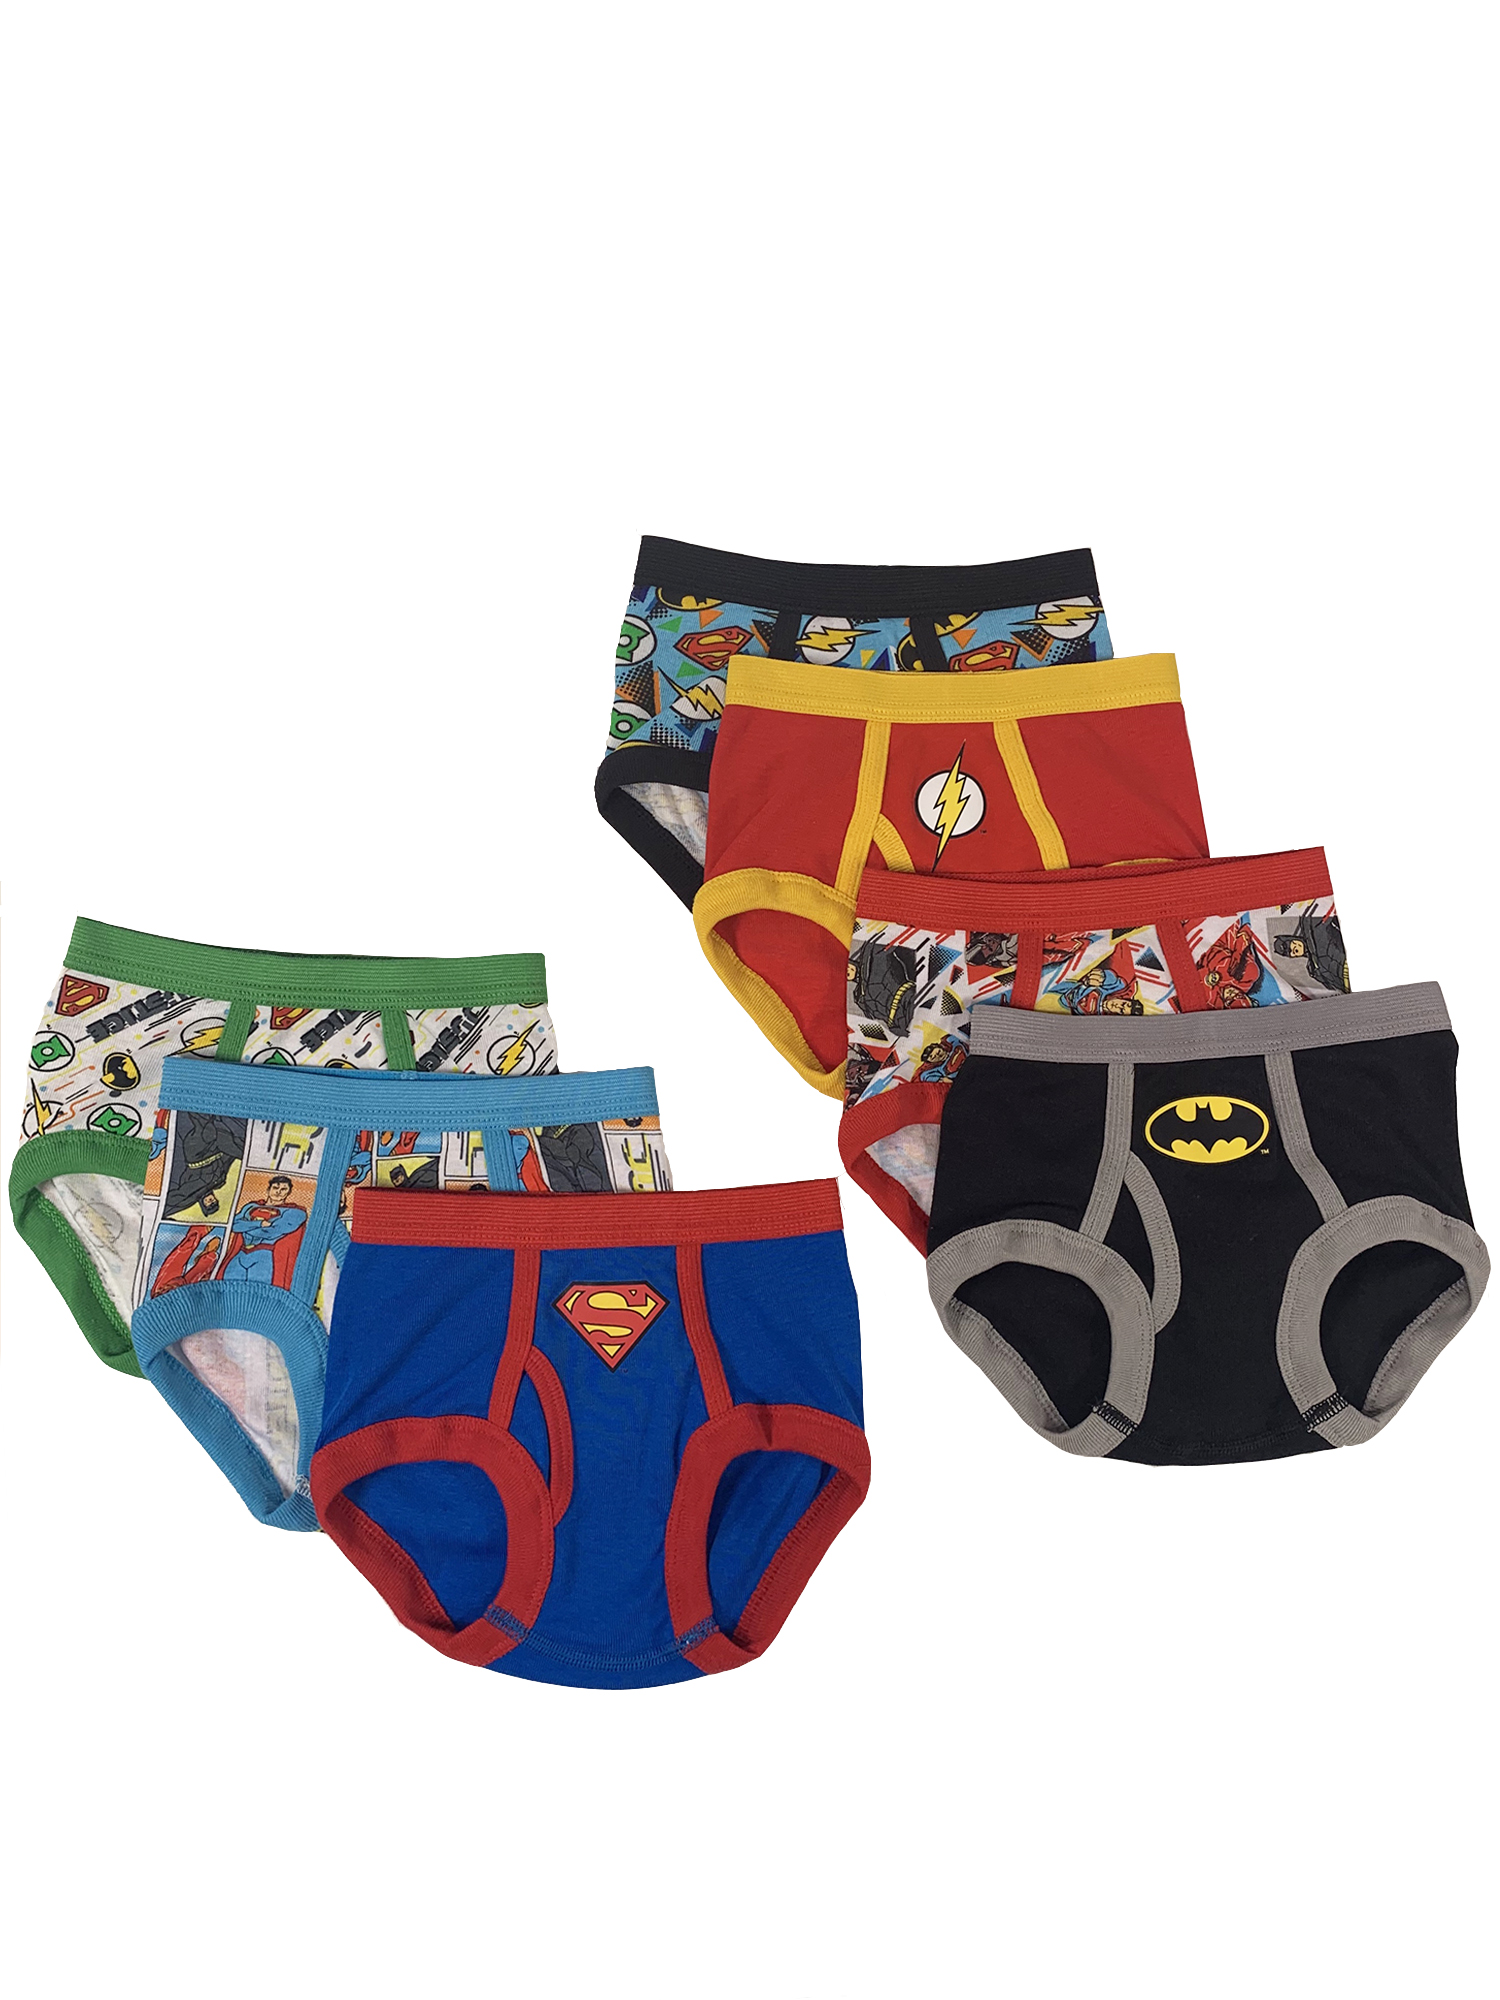 DC Superfriends Toddler Boys Underwear, 7-Pack - image 1 of 4